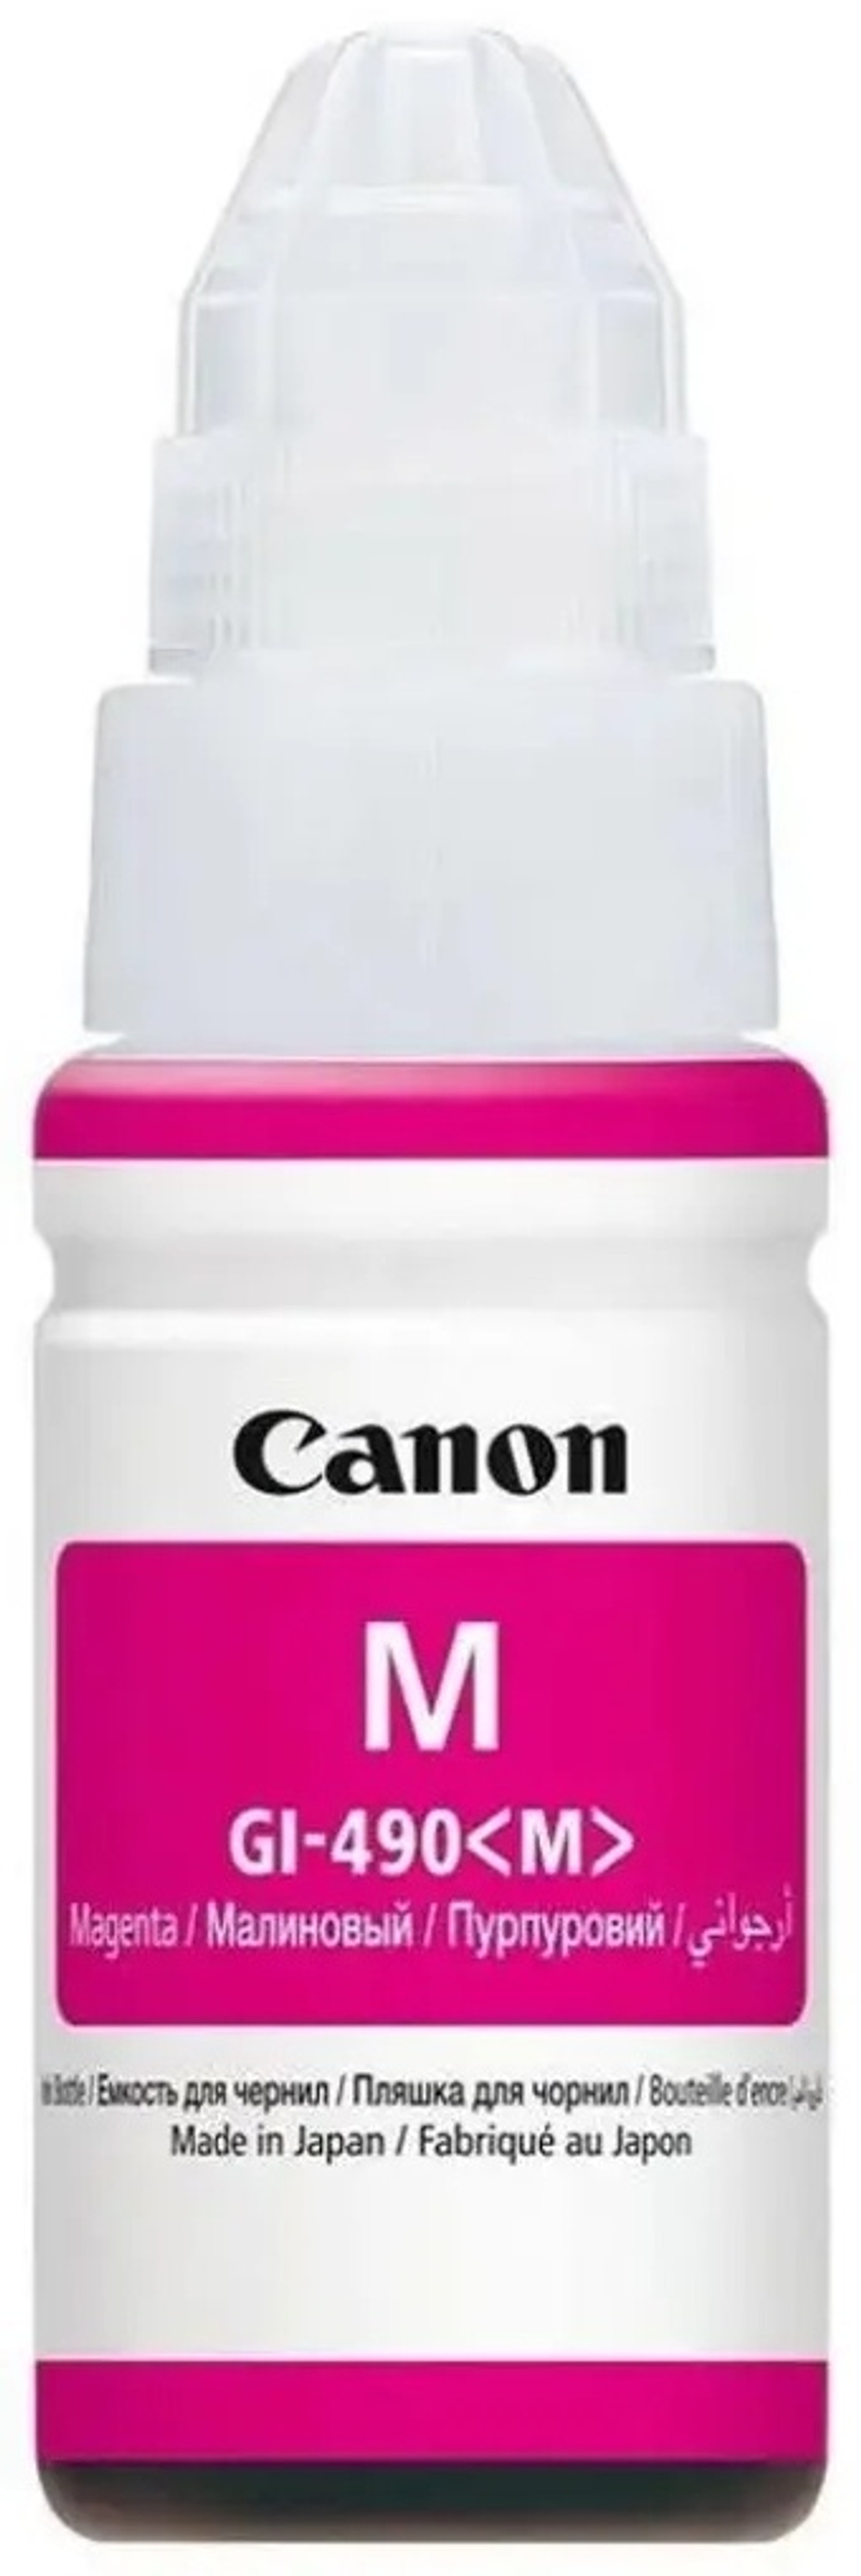 Картриджи Canon GI-490 M пурпурный (magenta)